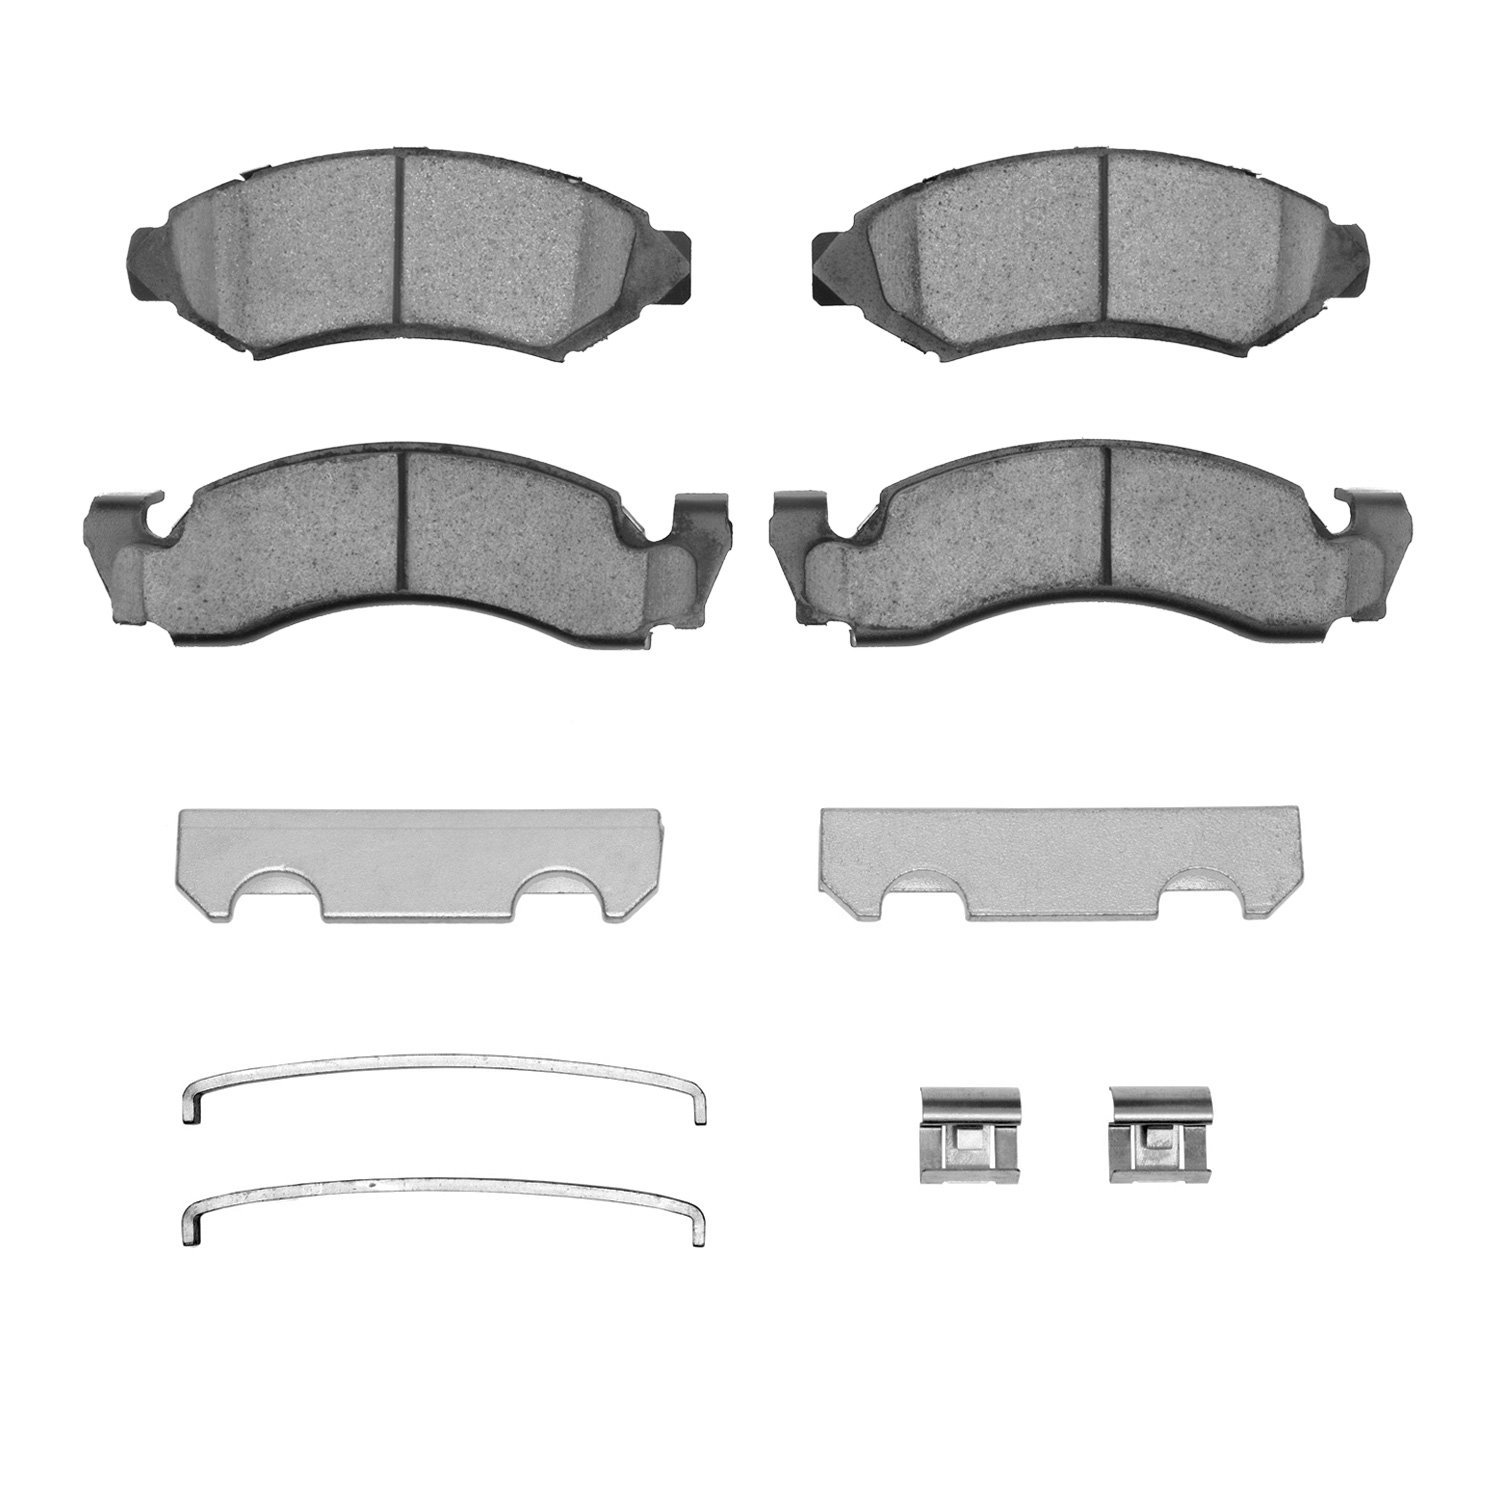 1551-0050-01 5000 Advanced Semi-Metallic Brake Pads & Hardware Kit, 1973-1985 Multiple Makes/Models, Position: Front